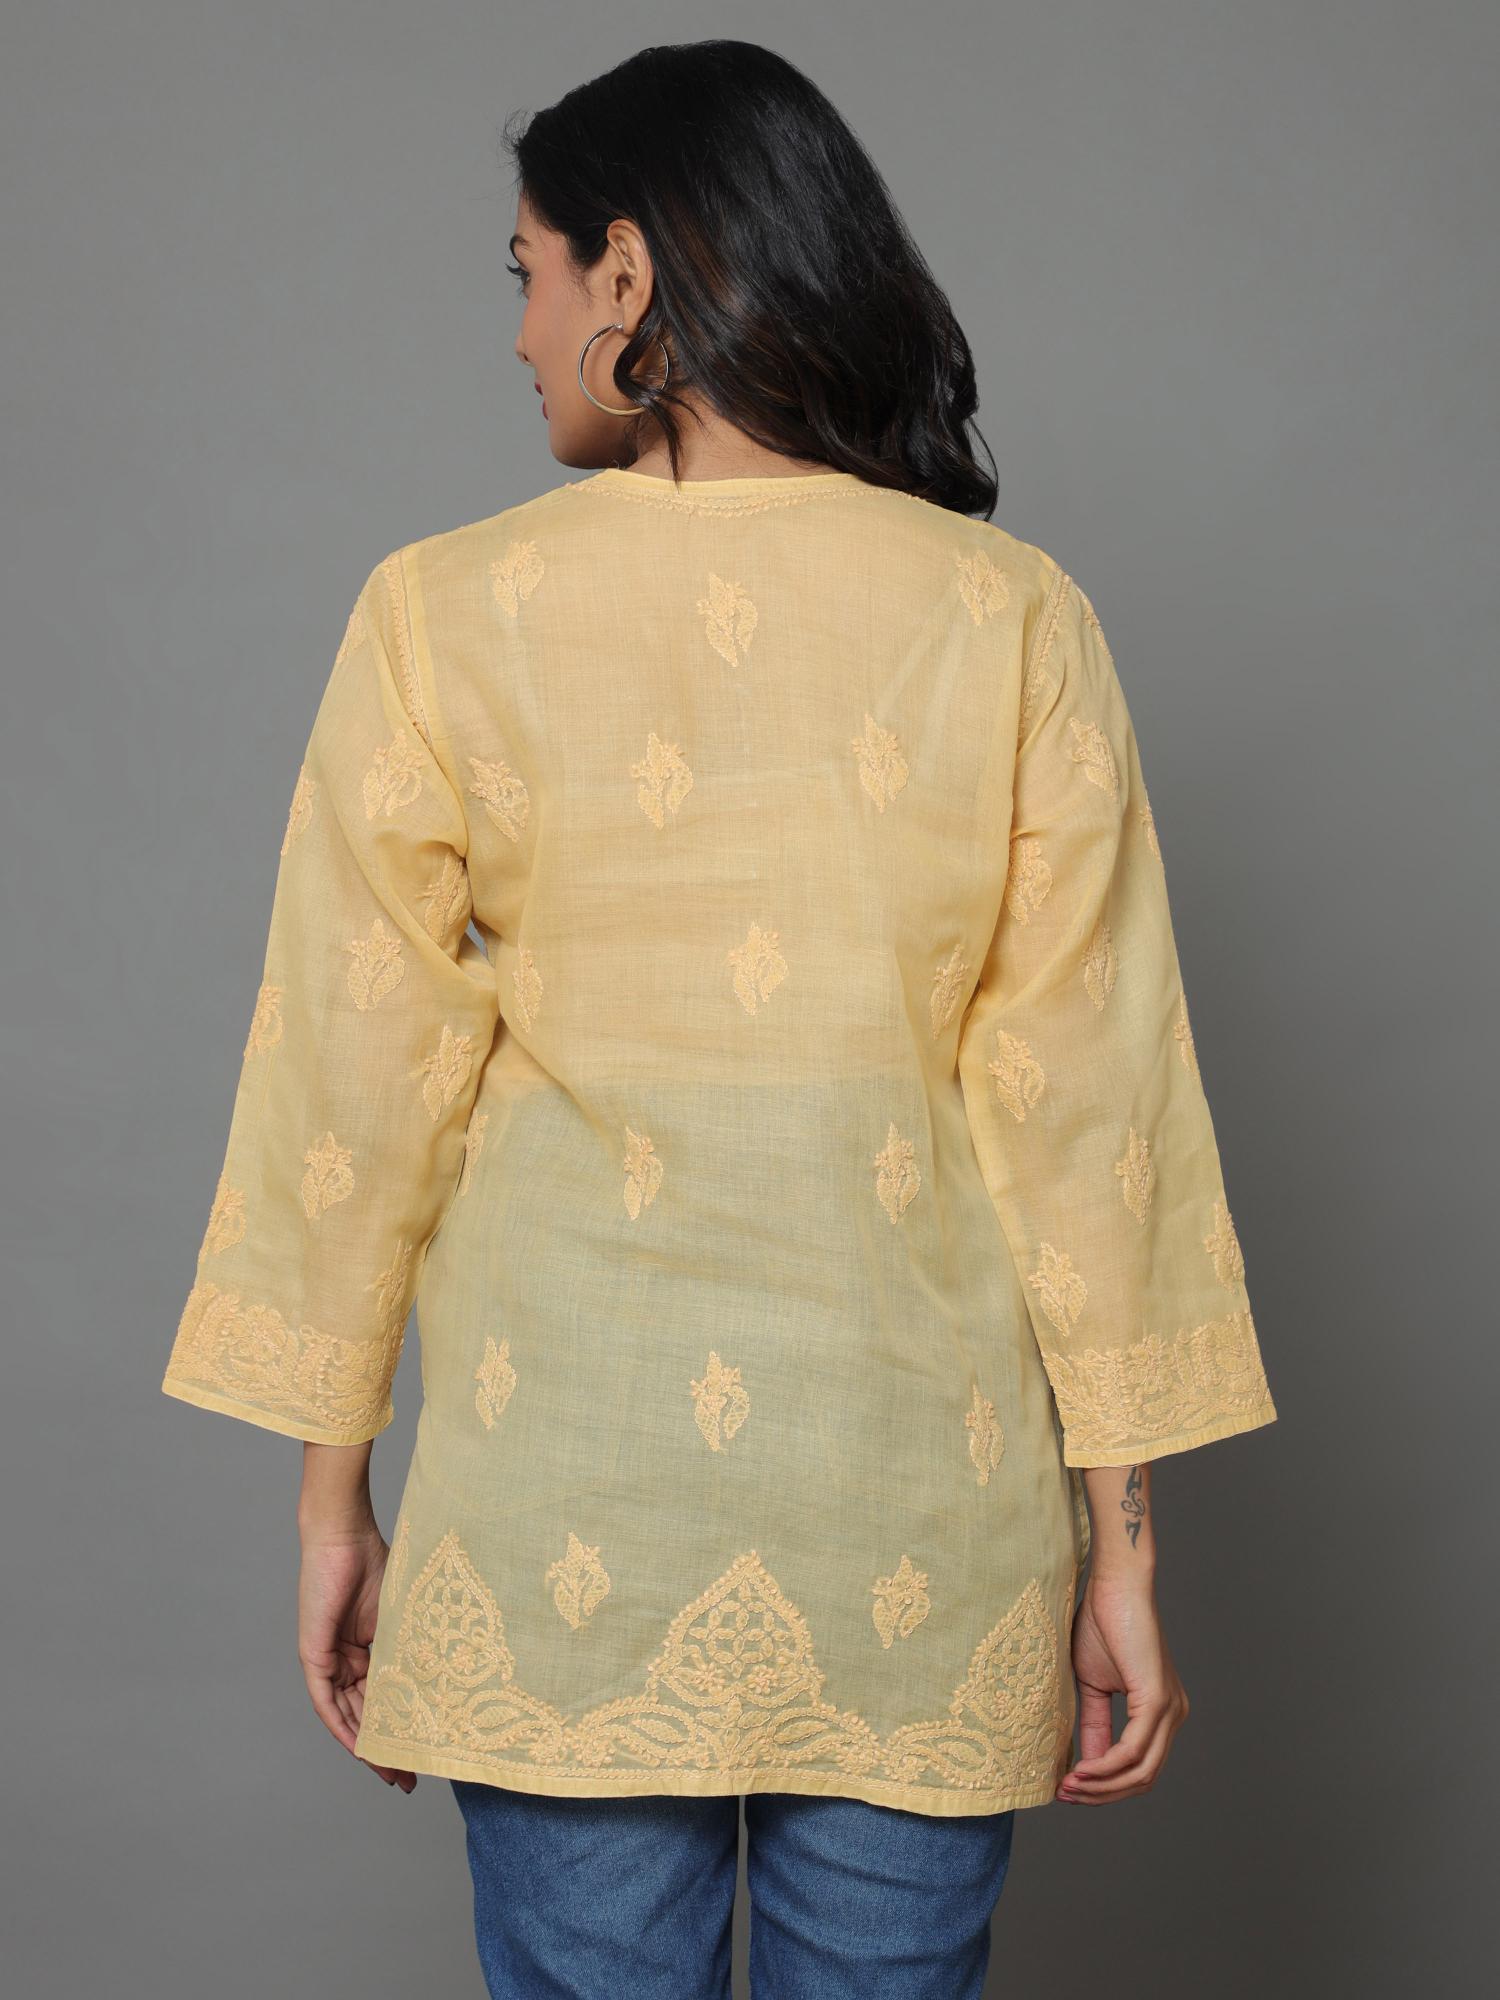 HerClozet Lucknow Hand Embroidery Chikankari Cotton Top-Beige -Size 38